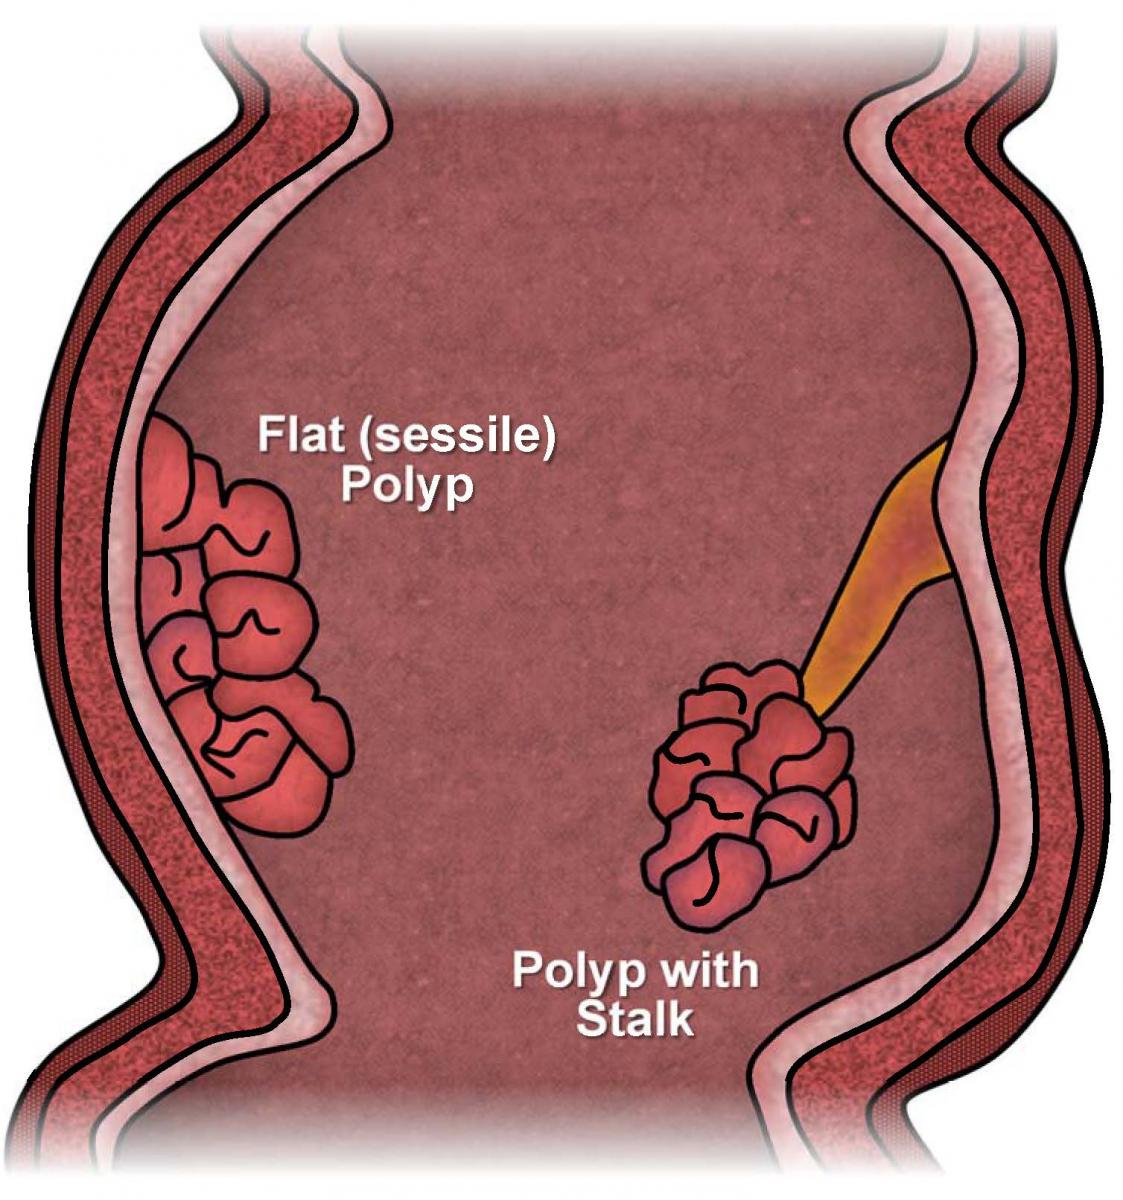 hpv and colon polyps